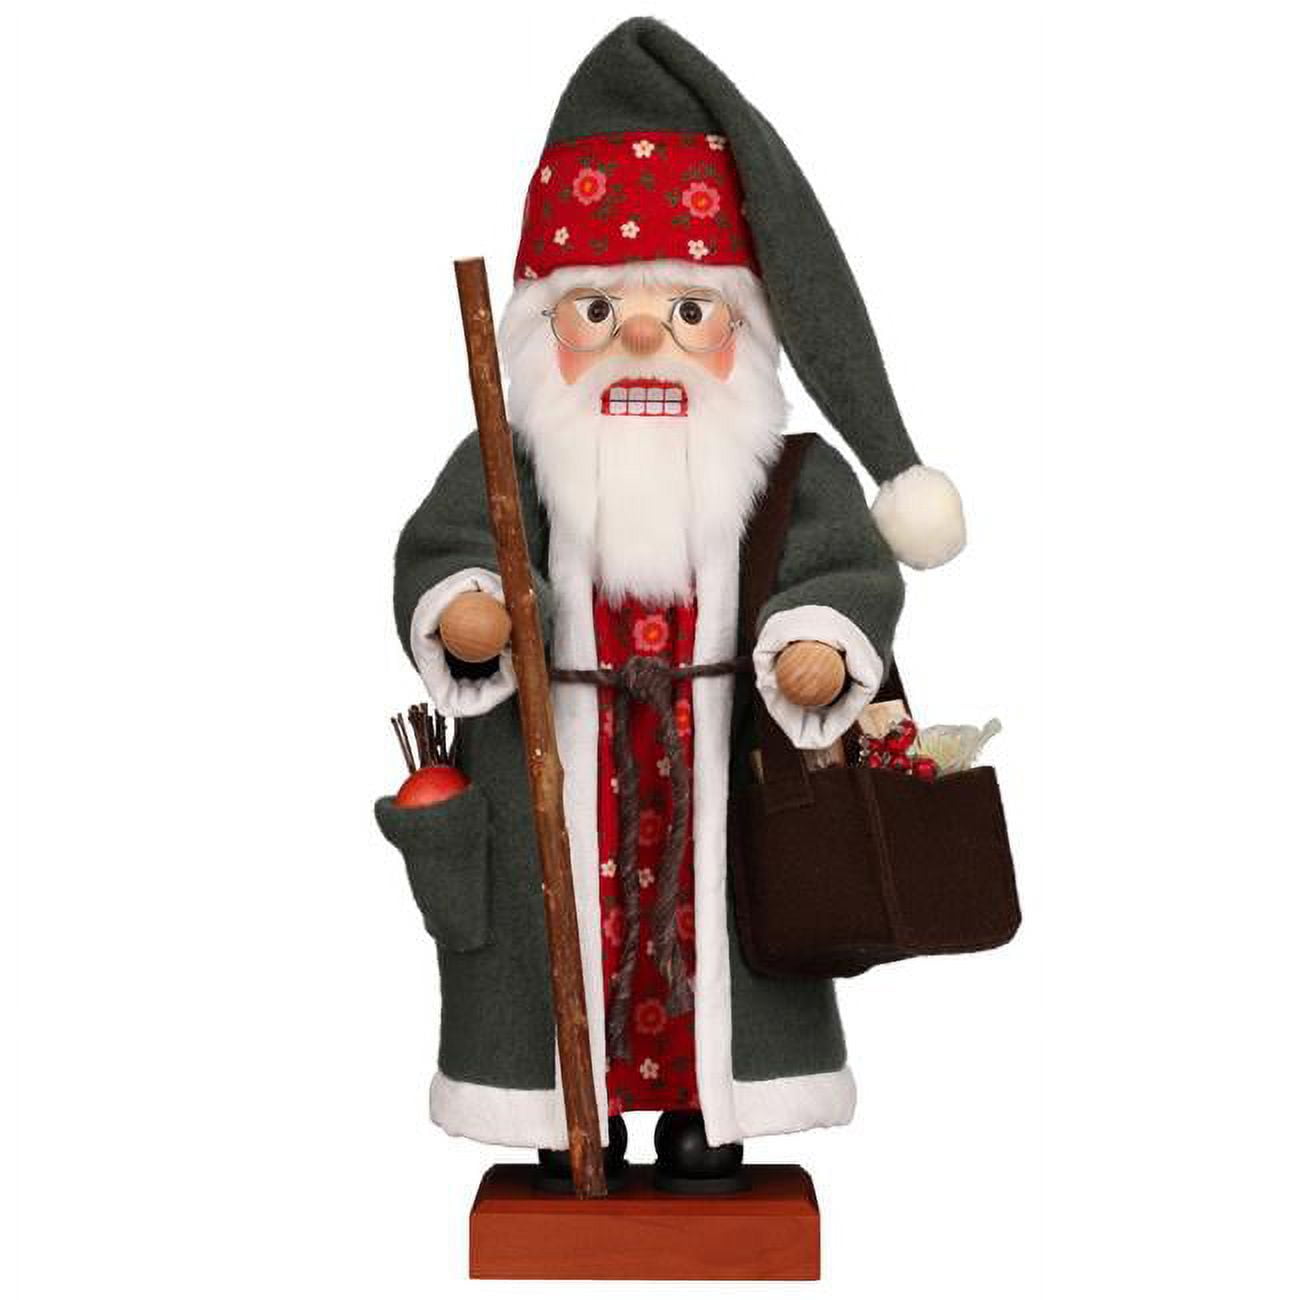 0-833 Christian Ulbricht Nutcracker - Santa With Fruit - Limited Edition Of 1000 Piece